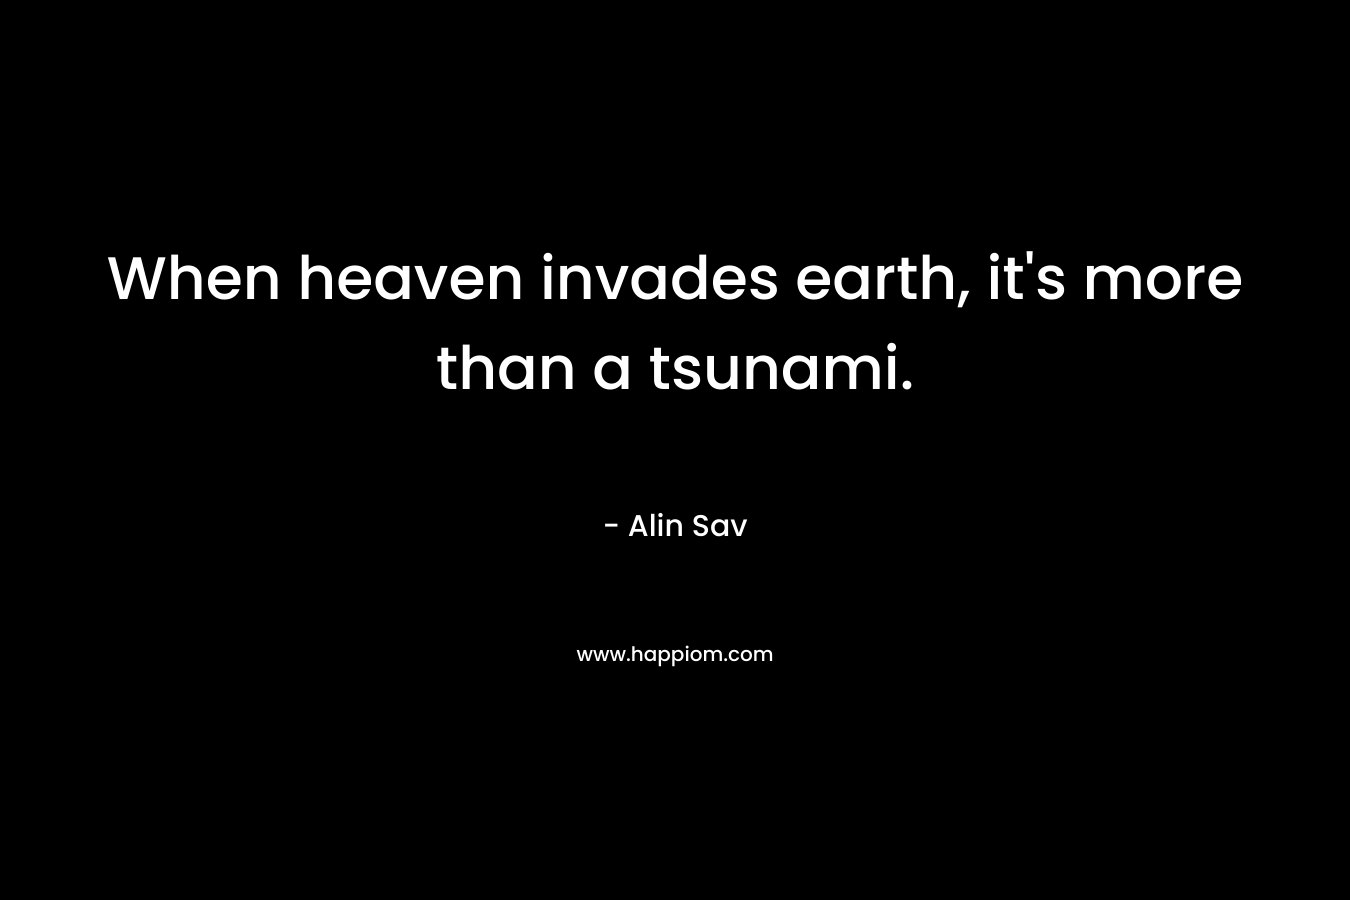 When heaven invades earth, it's more than a tsunami.